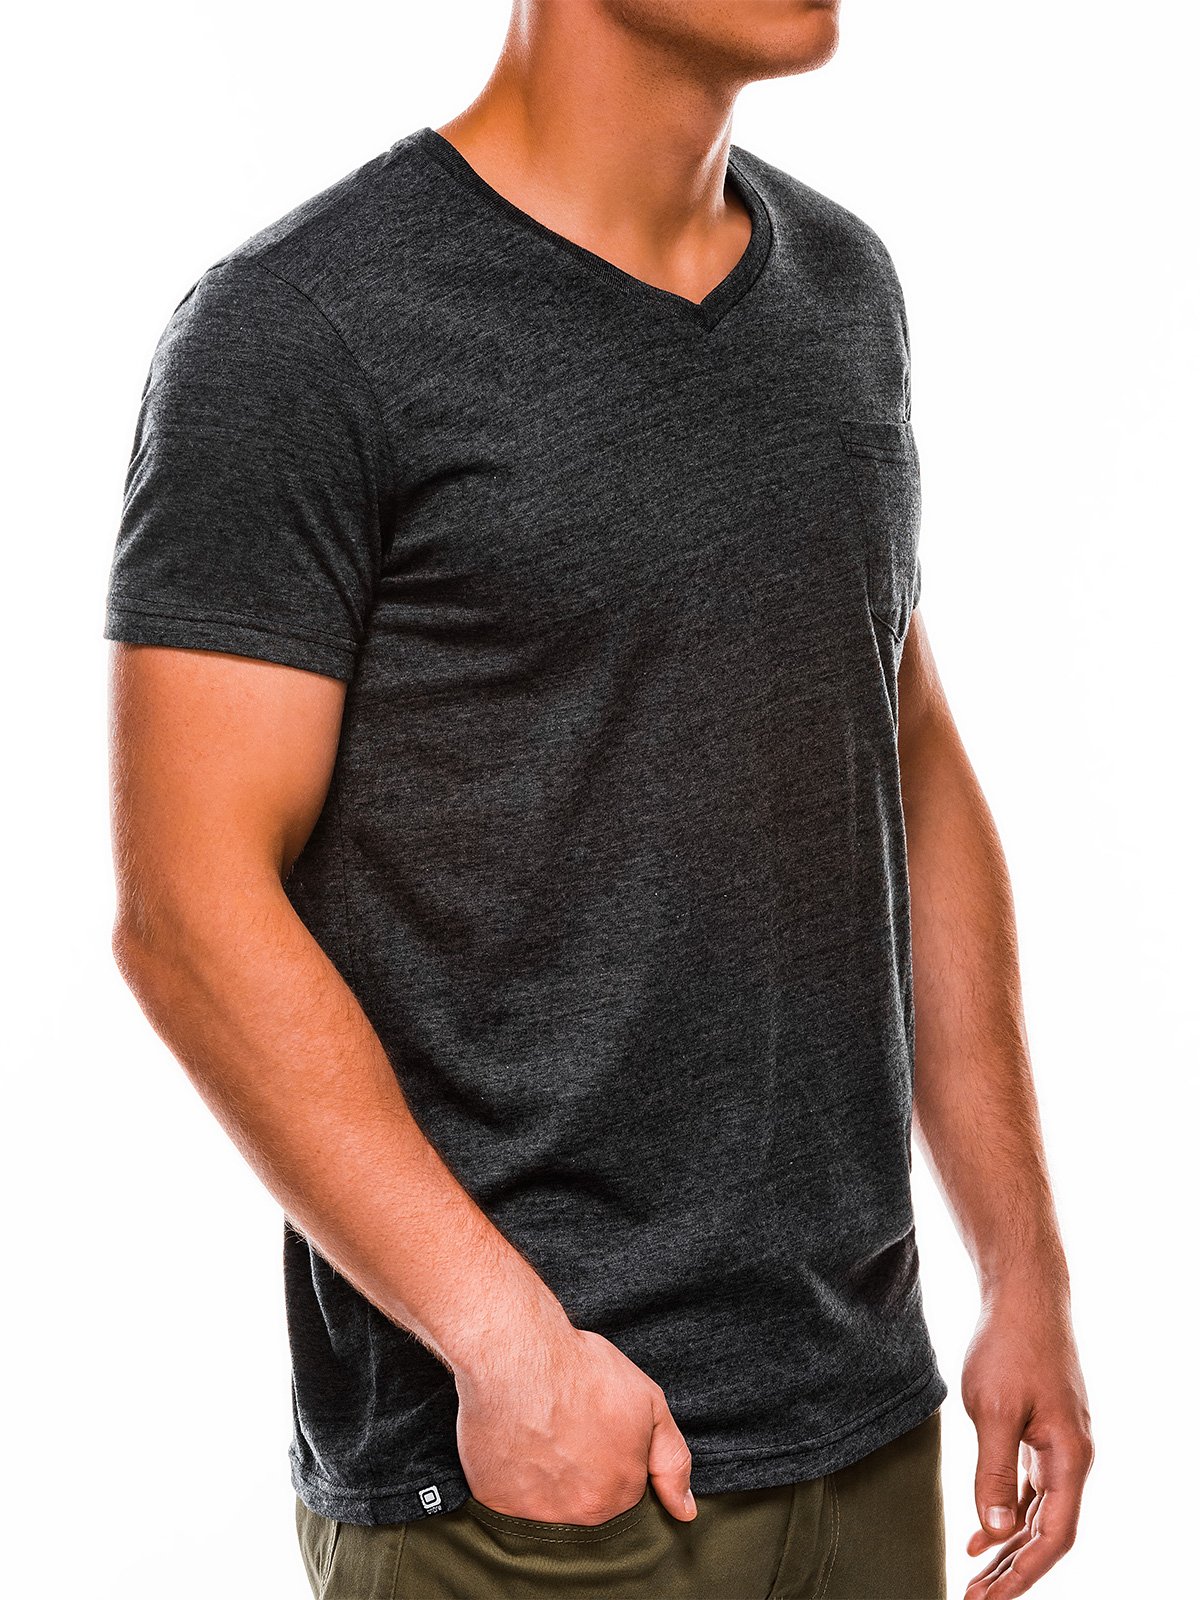 Men's plain t-shirt S1045 - dark grey | MODONE wholesale - Clothing For Men